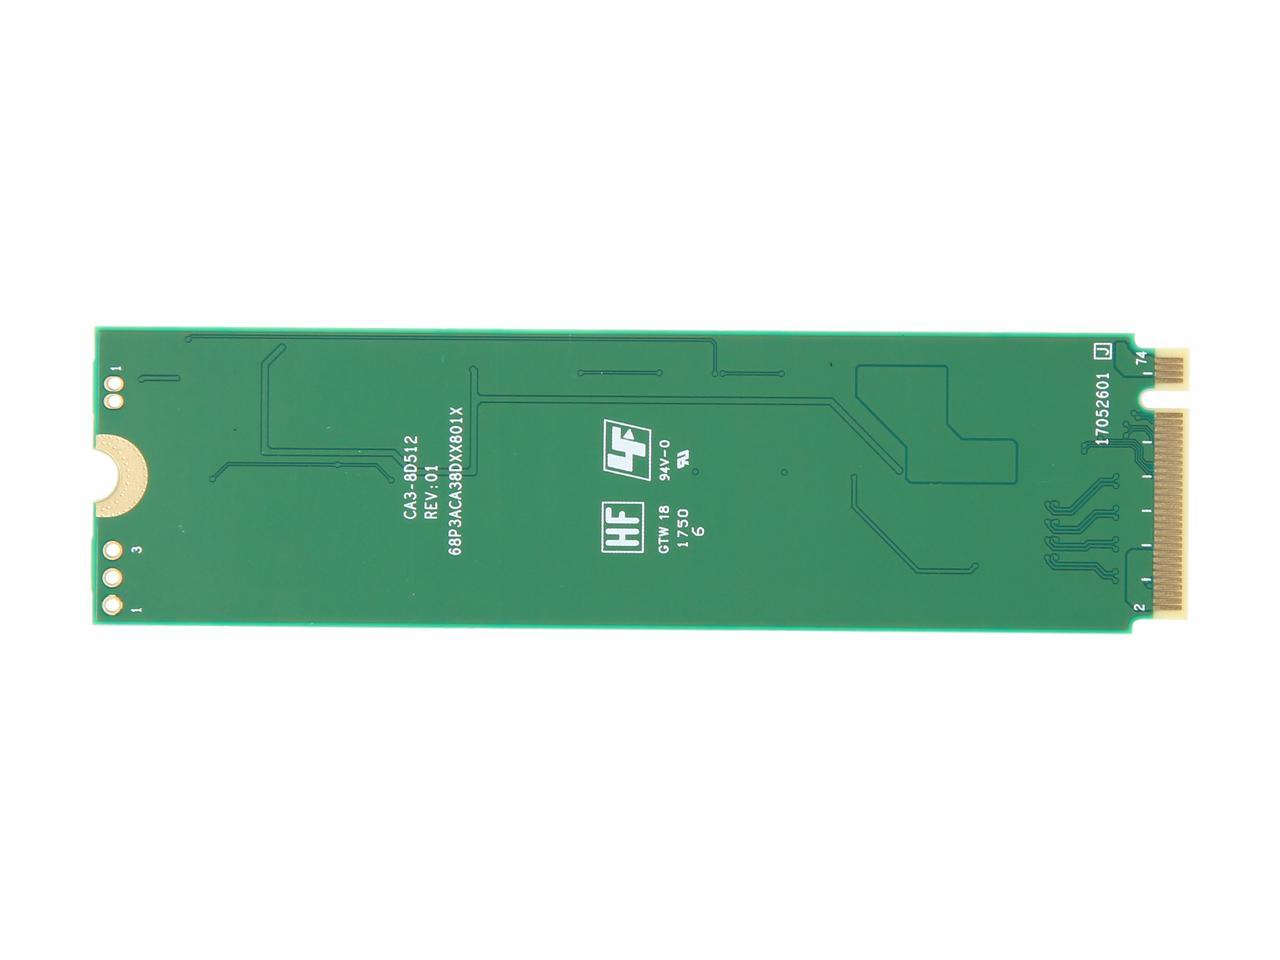 Plextor M9Pe M.2 2280 256GB NVMe PCI-Express 3.0 x4 3D NAND Internal Solid State Drive (SSD) PX-256M9PeGN